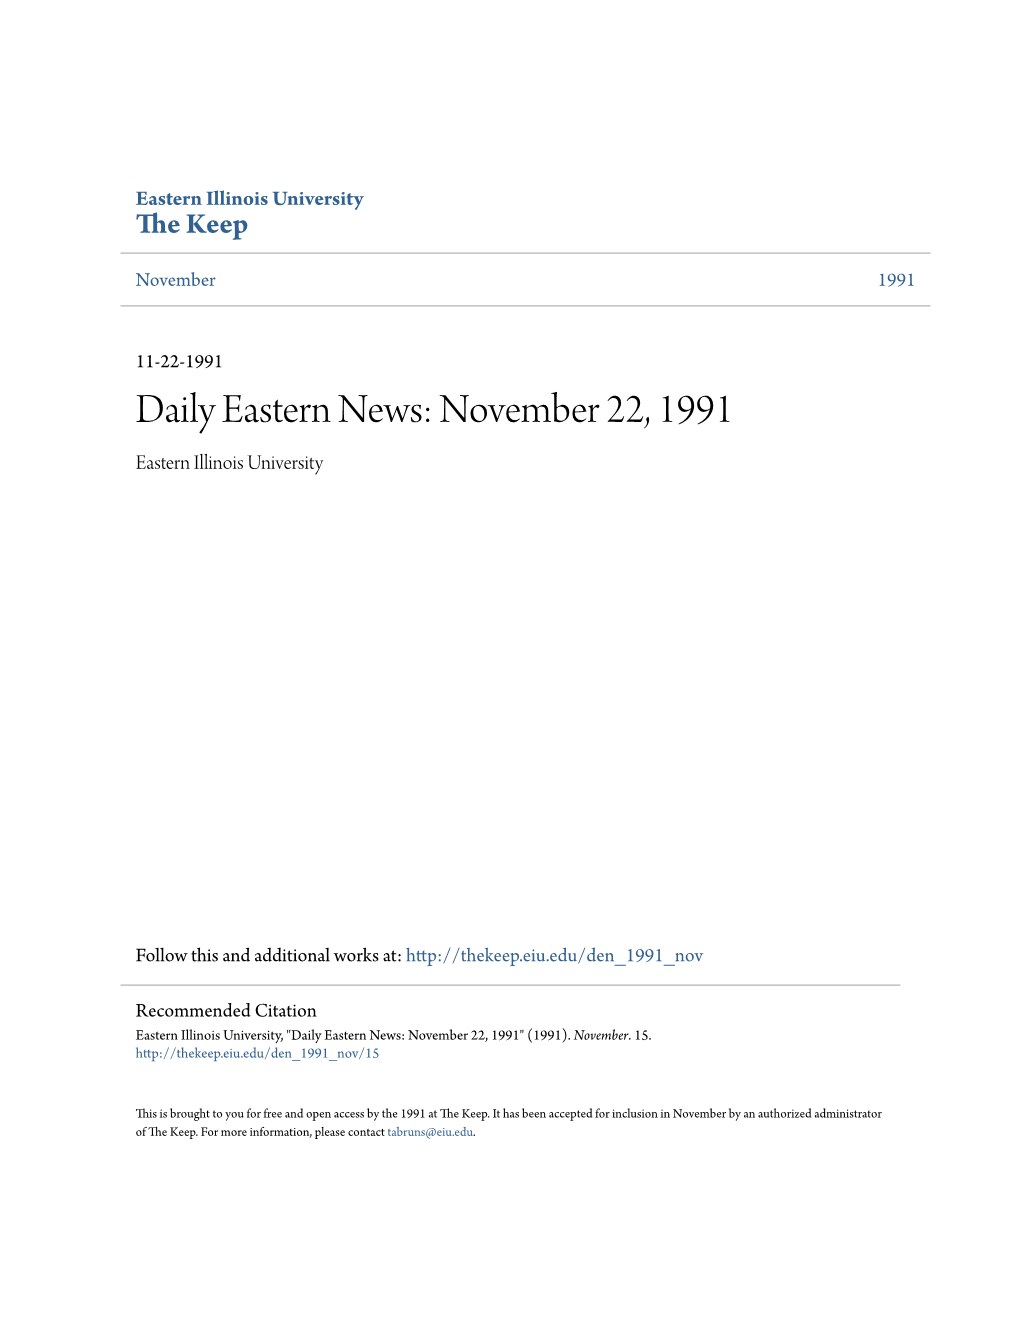 Daily Eastern News: November 22, 1991 Eastern Illinois University